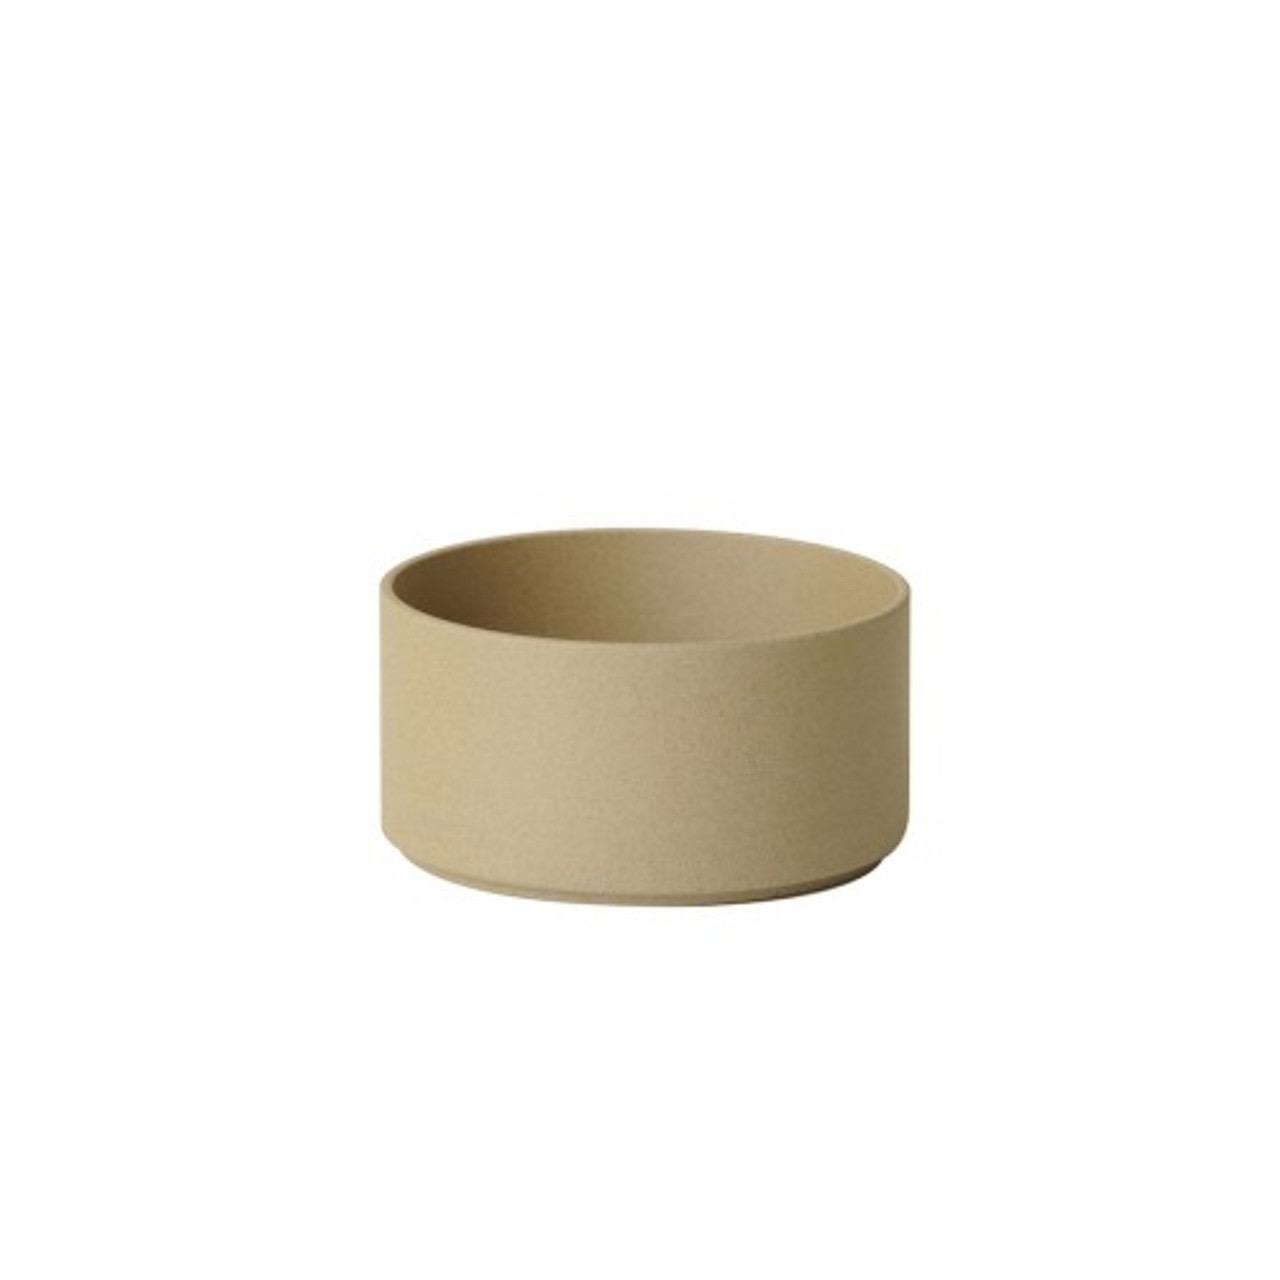 Hasami Porcelain Straight Tall Bowl - Natural Sand - Tiny - 3 3/4"